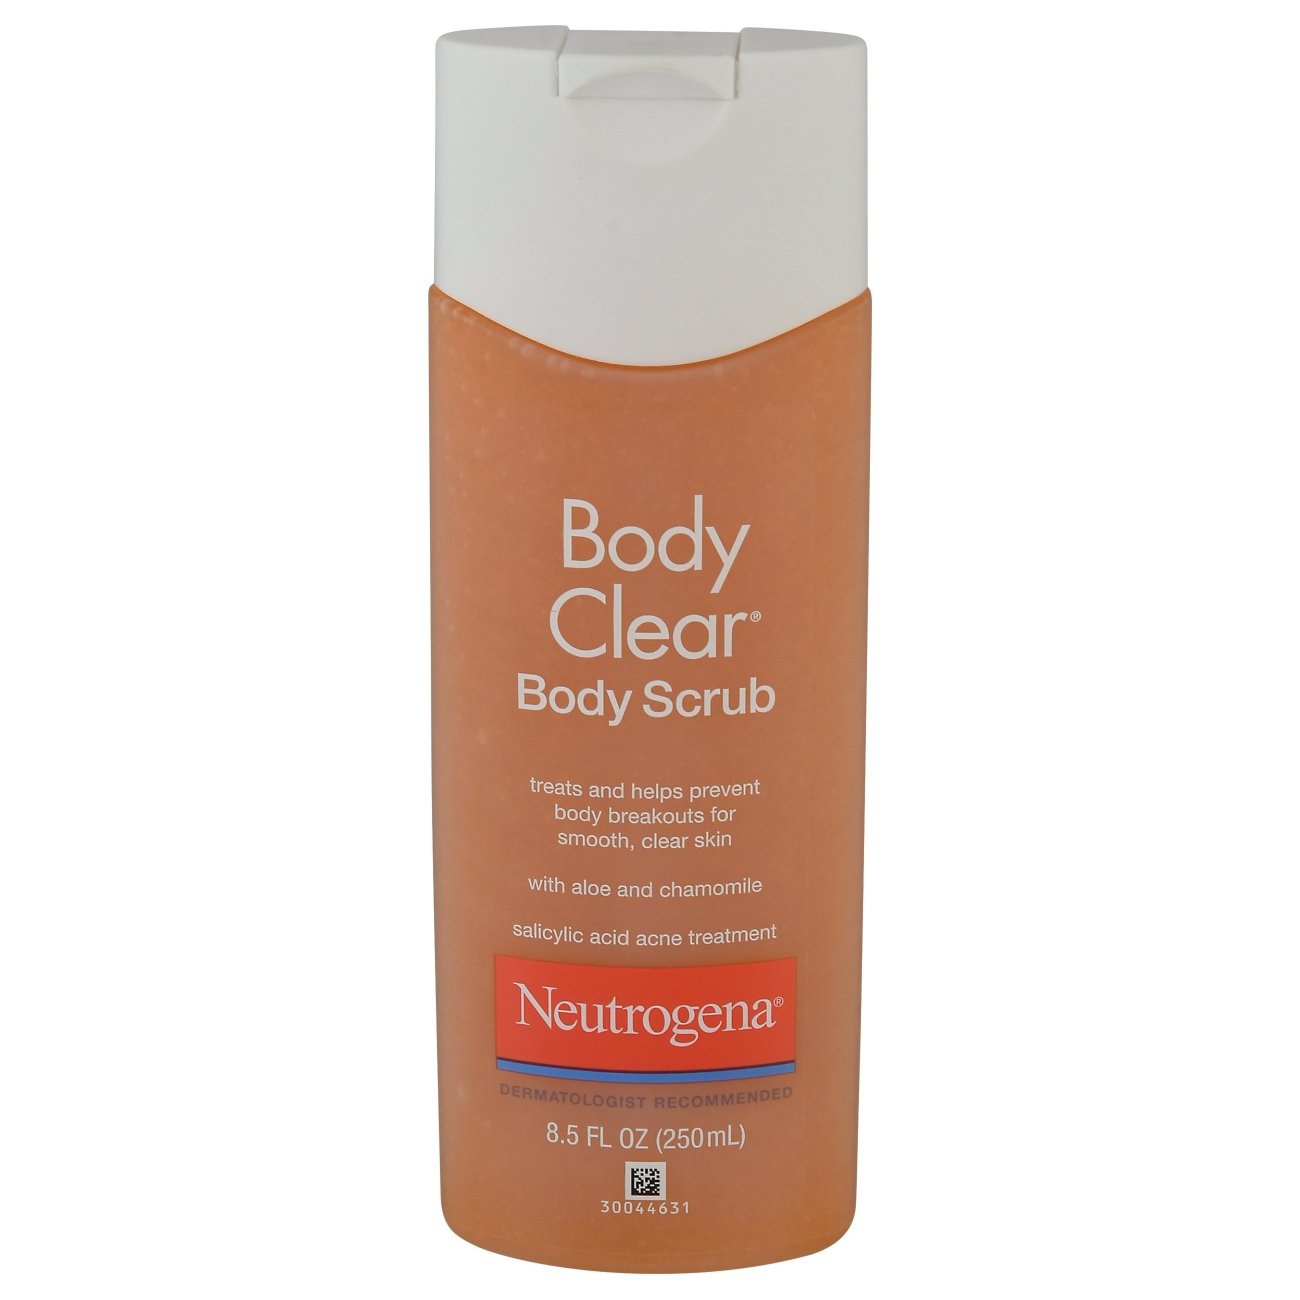 Neutrogena Body Clear Body Scrub Shop Body Scrubs At H E B